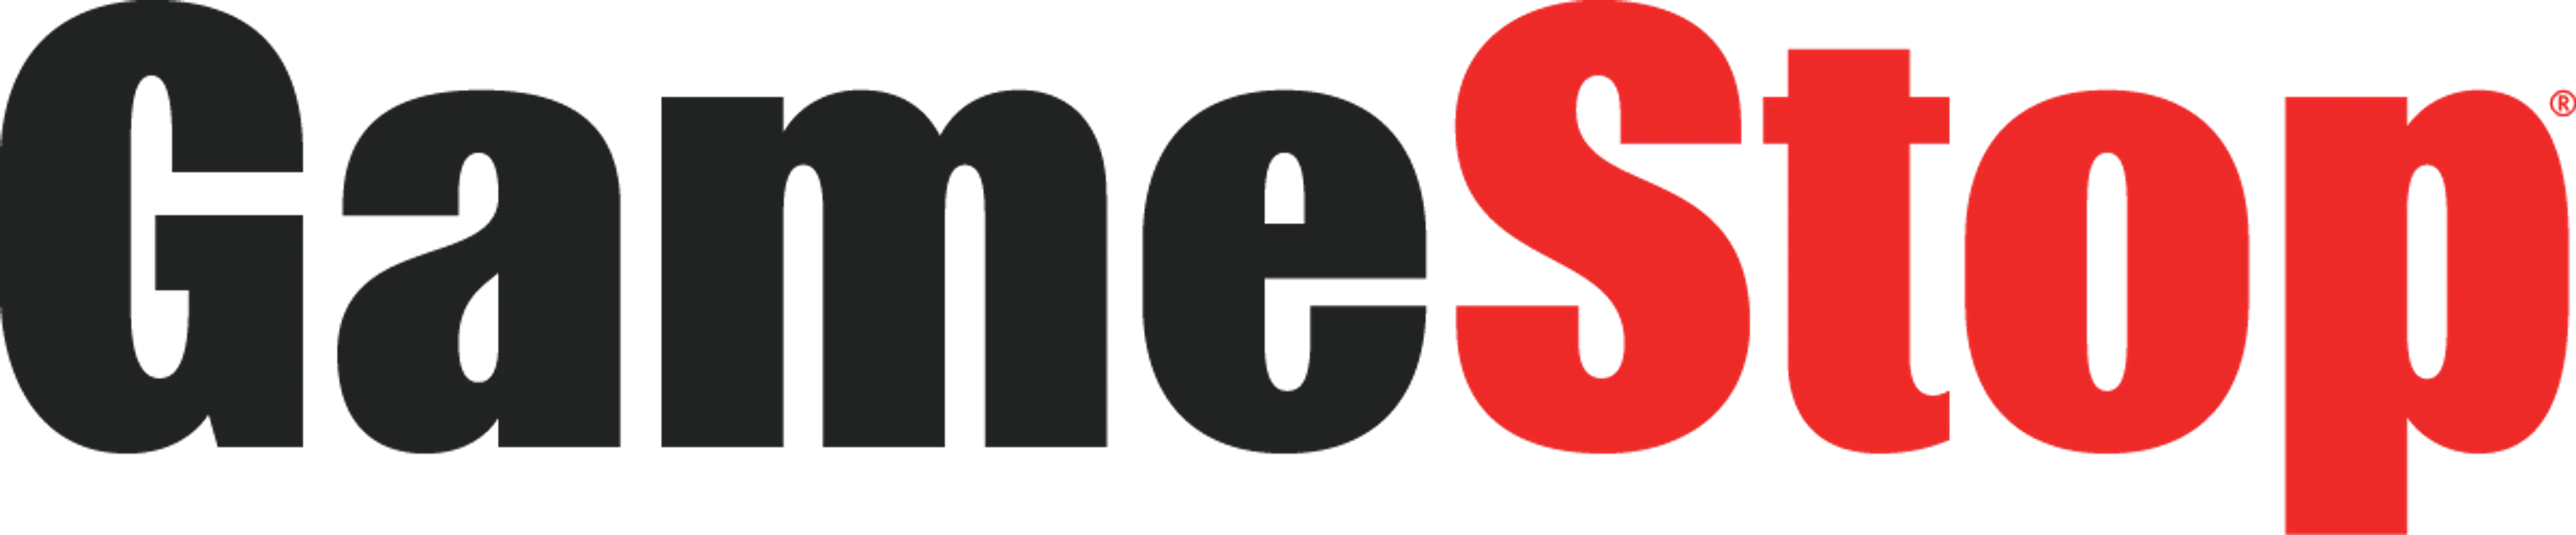 GAMESTOP logo